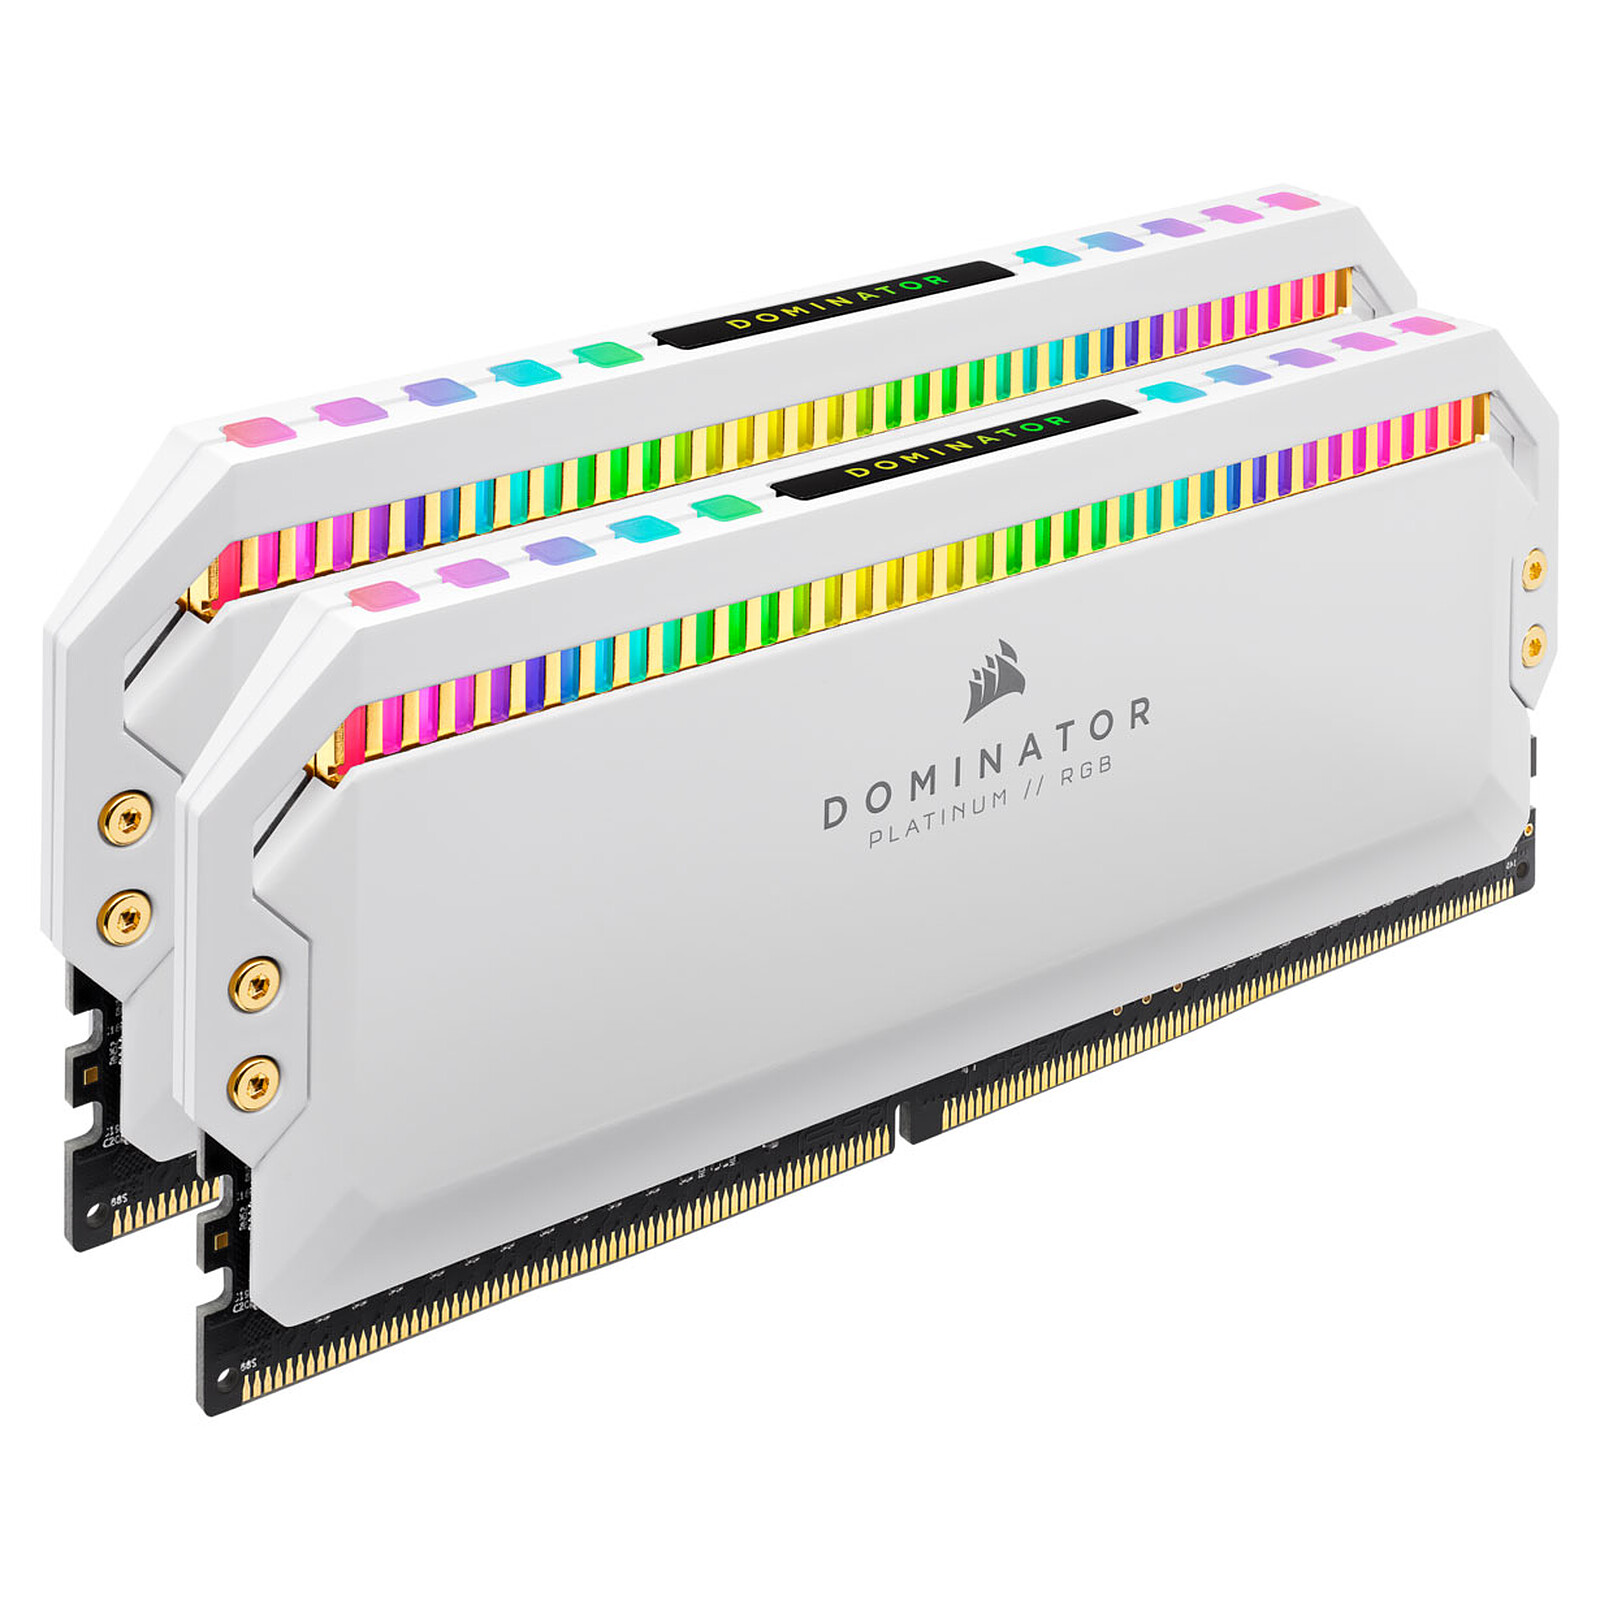 Corsair Dominator Platinum RGB 16 Go (2 x 8 Go) DDR4 3200 MHz CL16